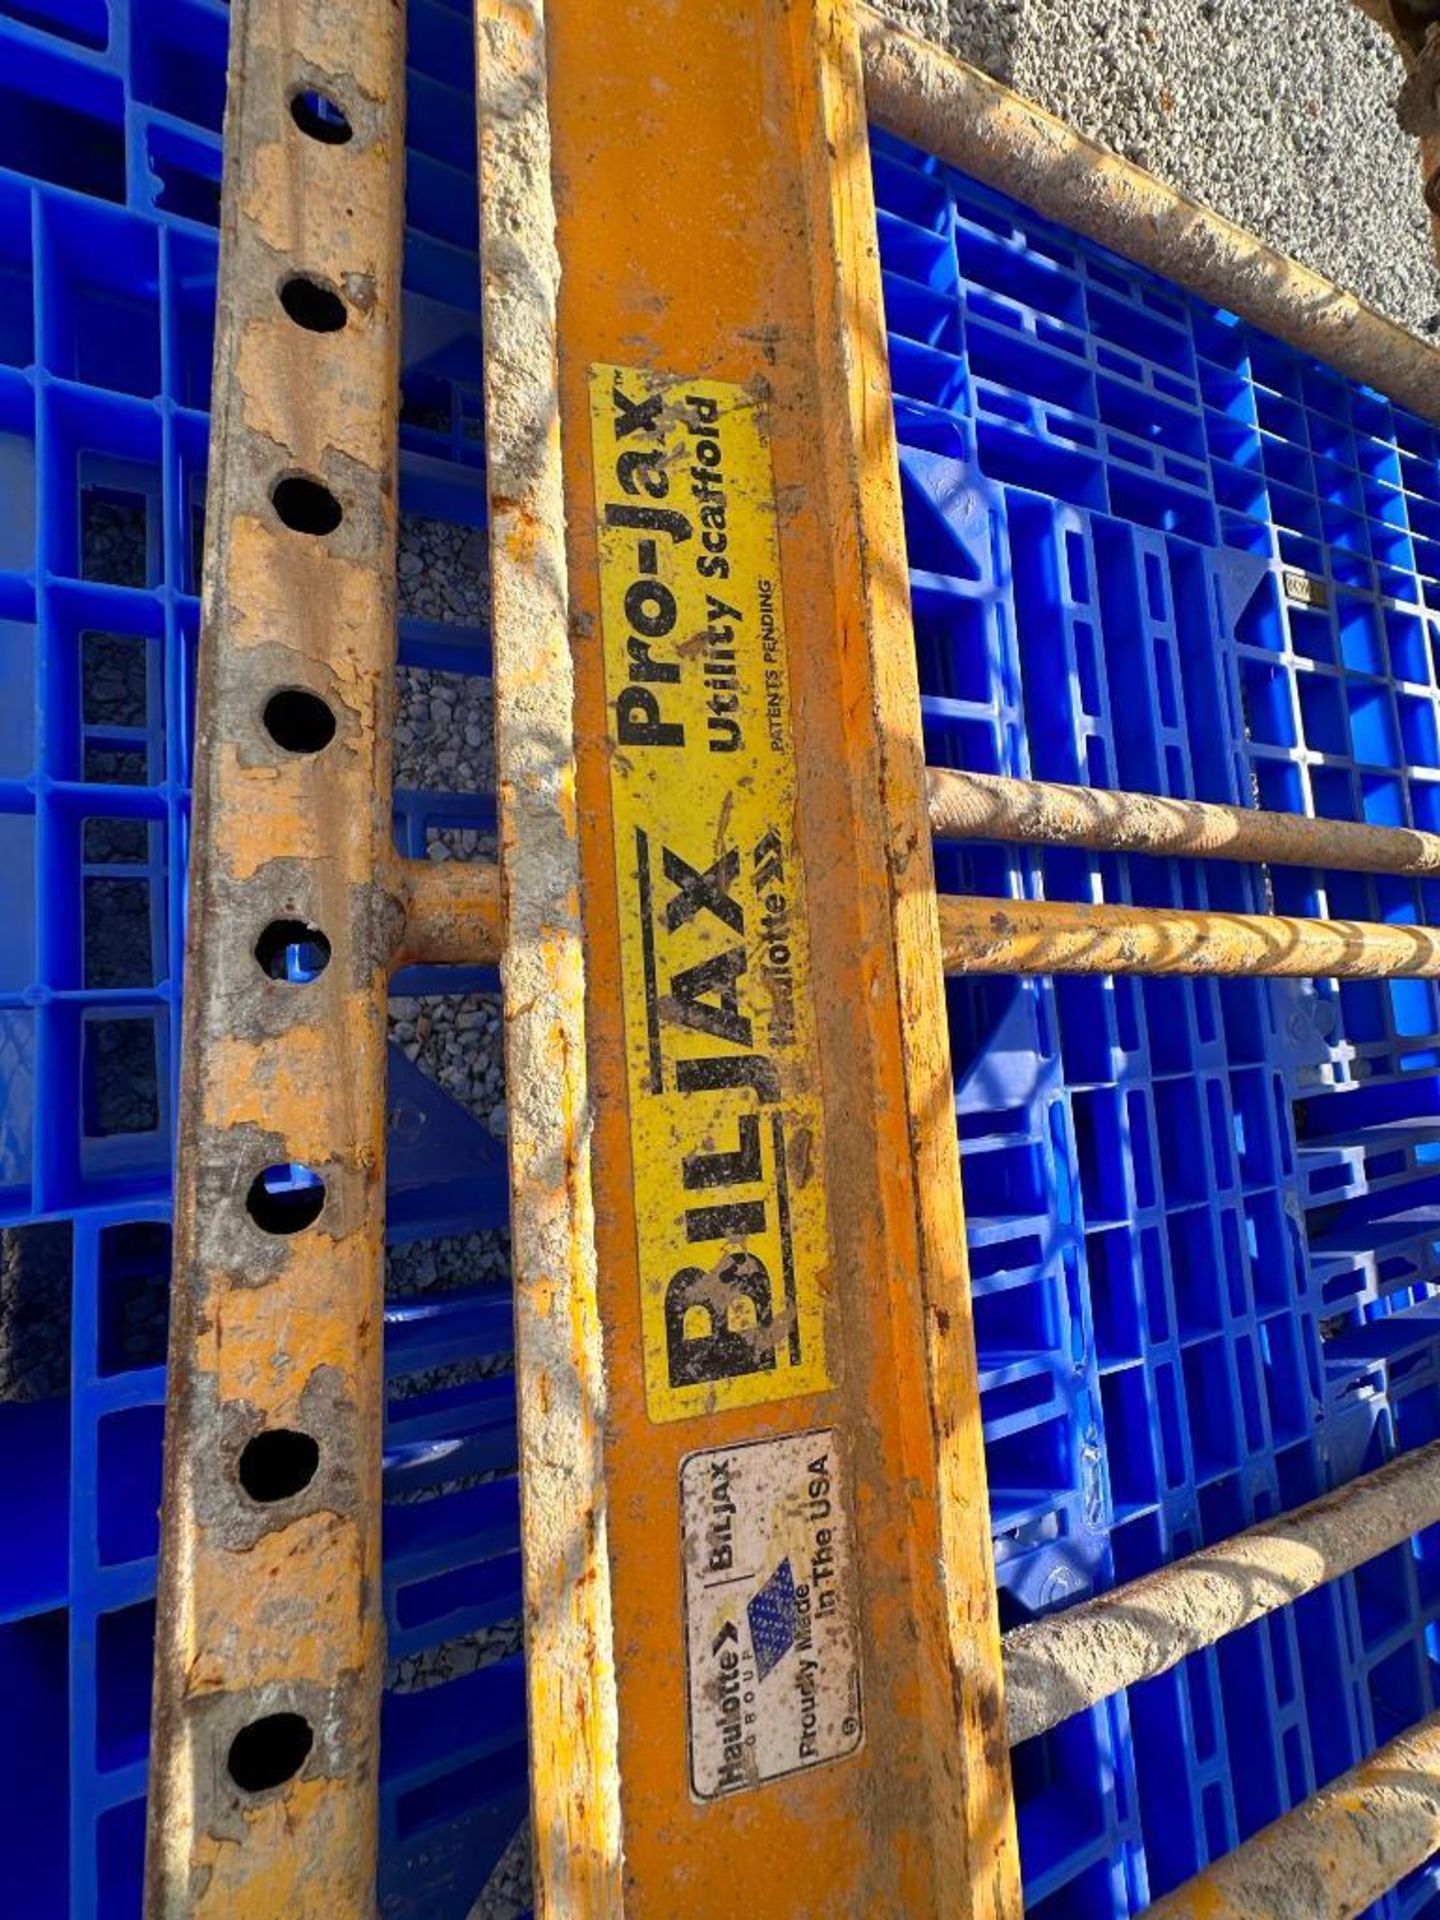 Bil-Jax 6' steel rolling scaffolding, located in Mt. Pleasant, IA. - Image 3 of 3